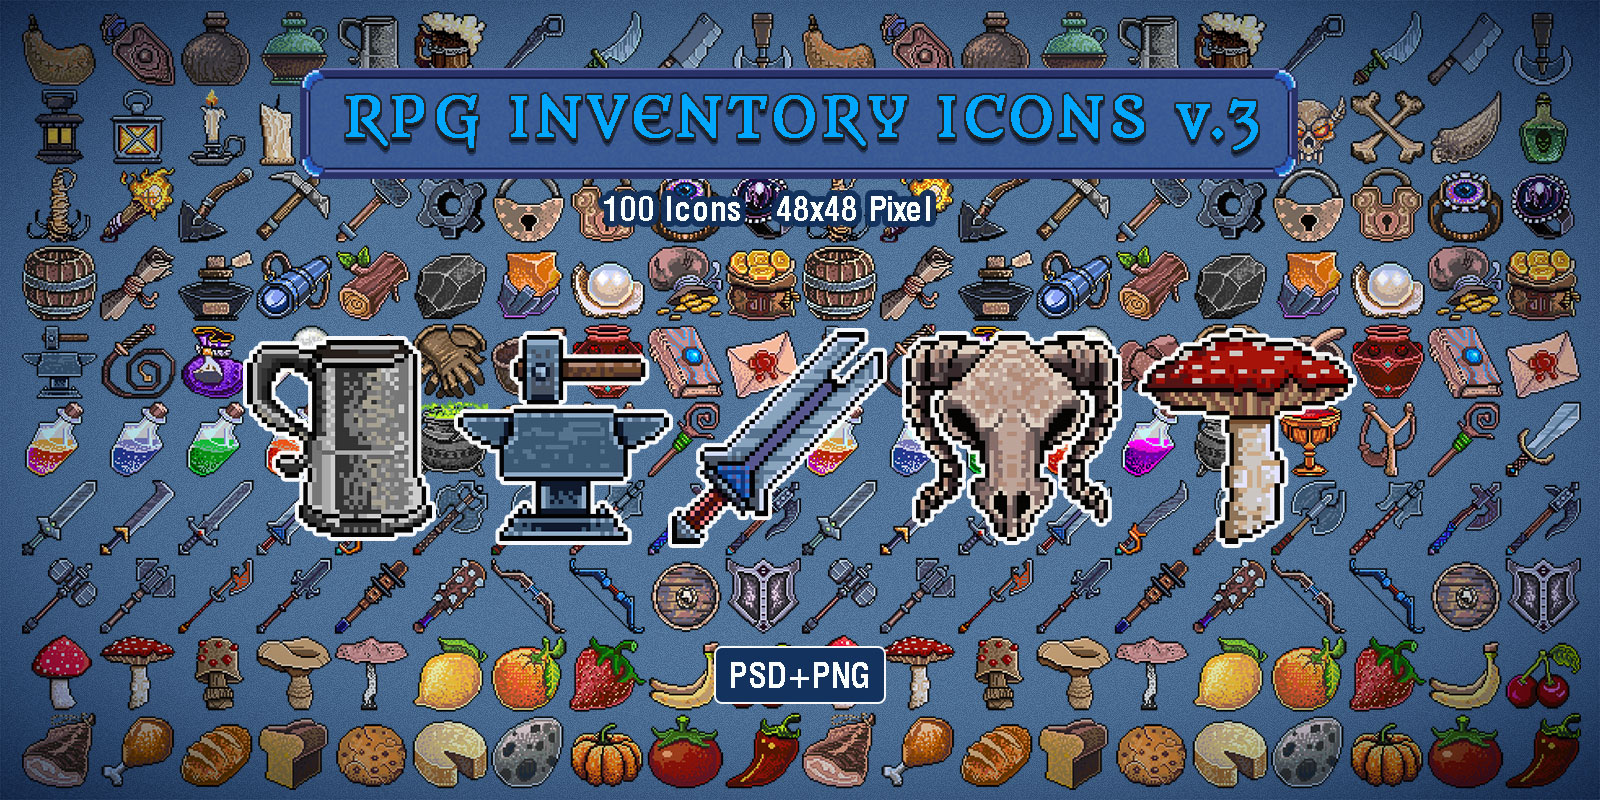 RPG Inventory Icons v.3